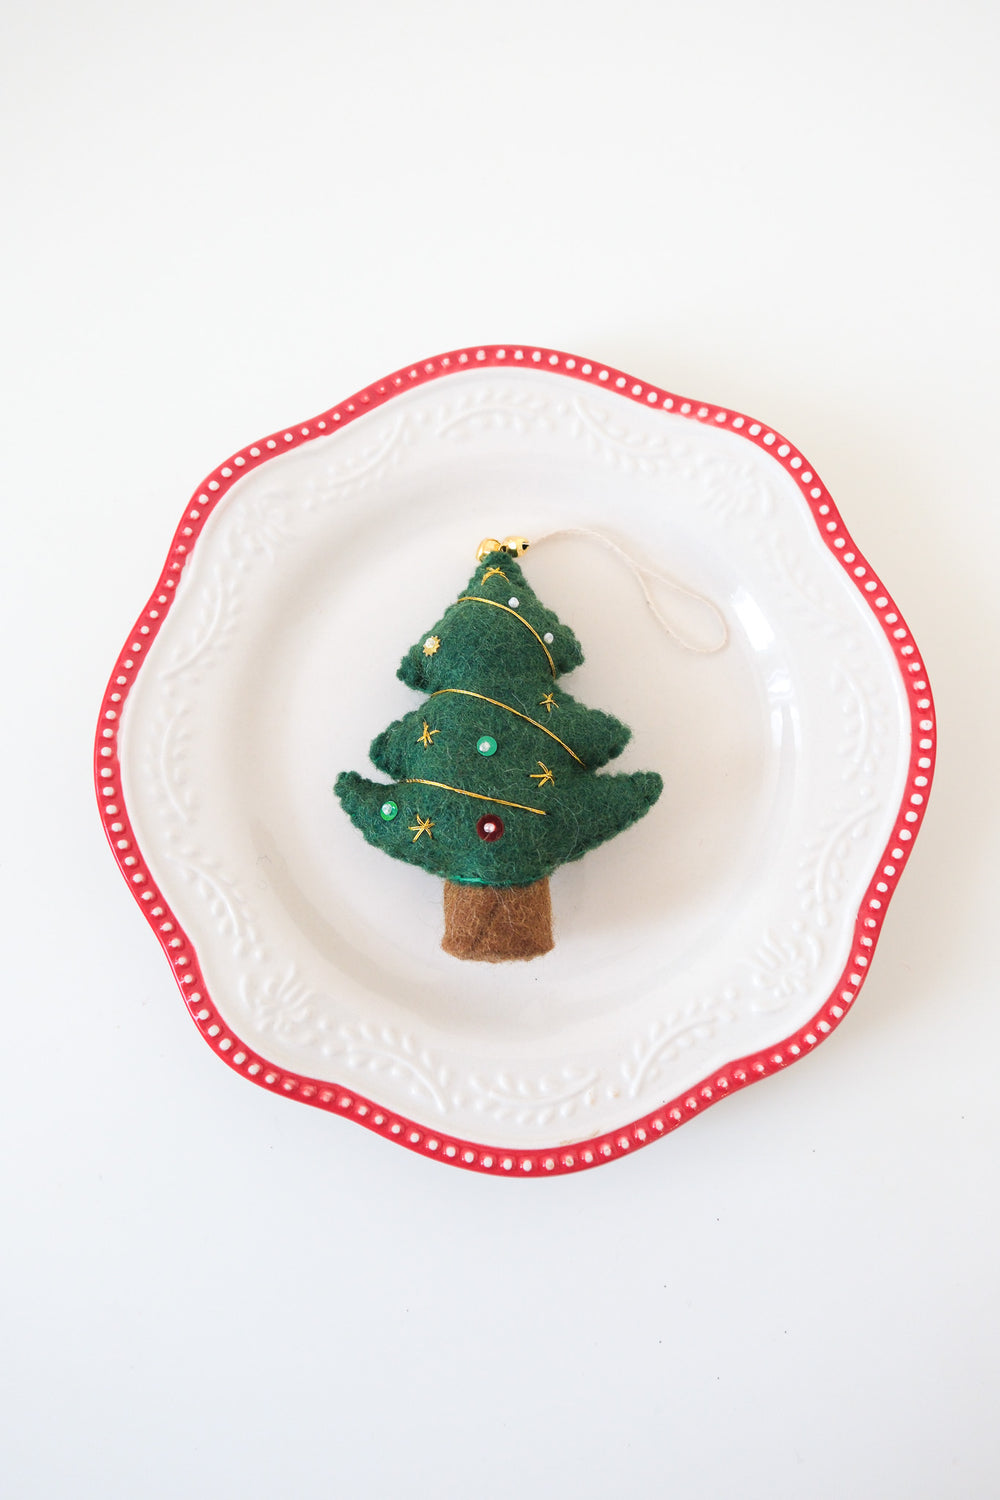 [XMAS] Christmas Tree Ornaments